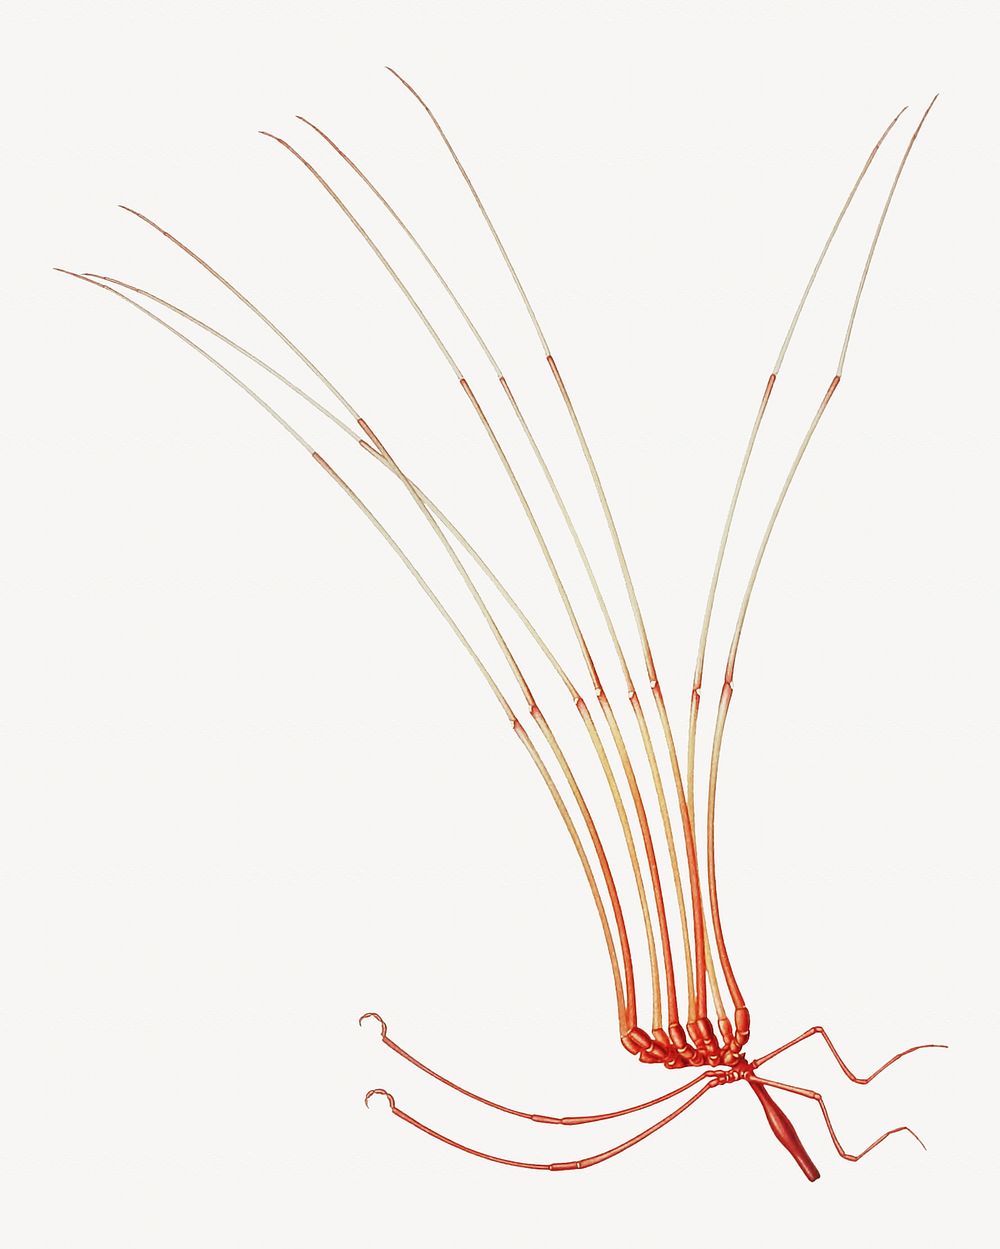 Sea spider illustration